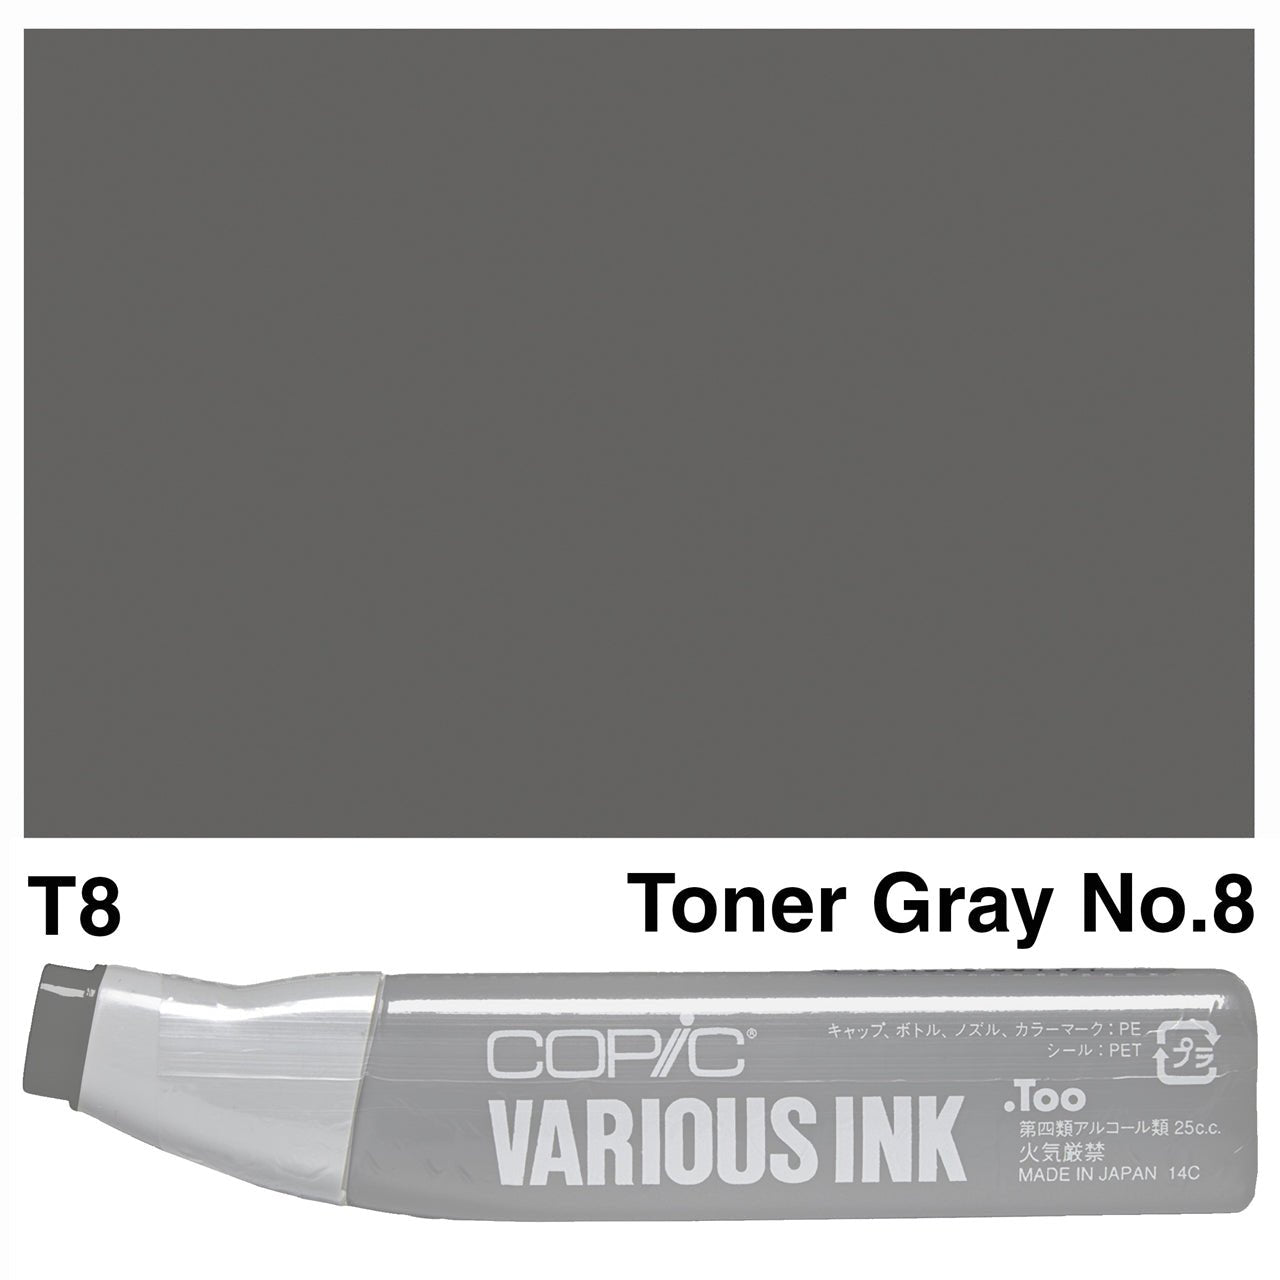 Copic Various Ink T8 Toner Gray No.8 - theartshop.com.au